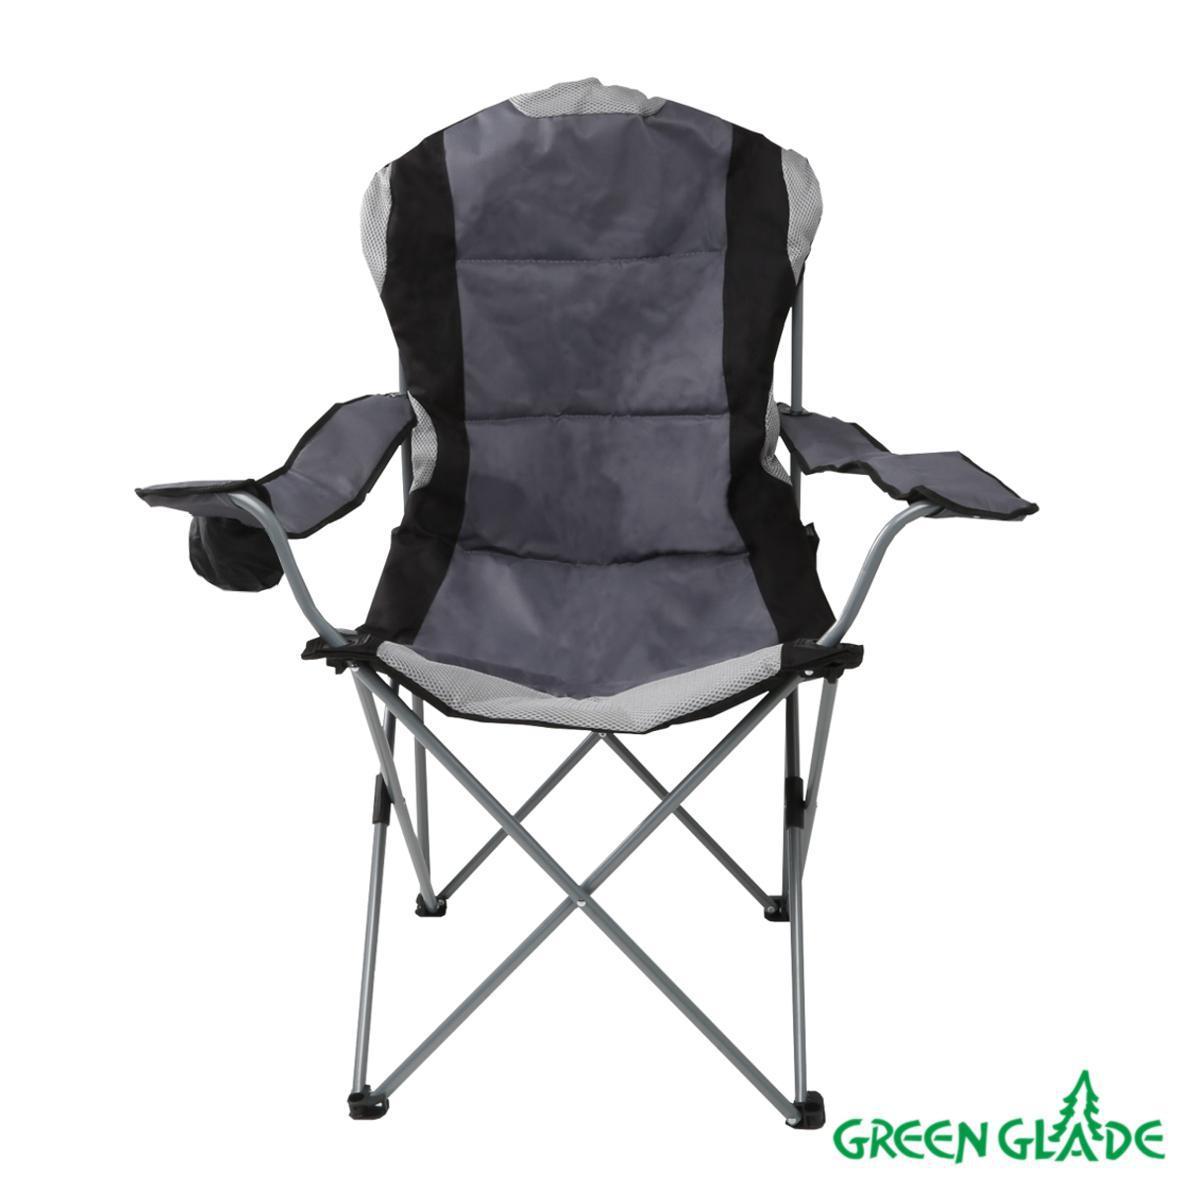 Кресло складное green glade 2306